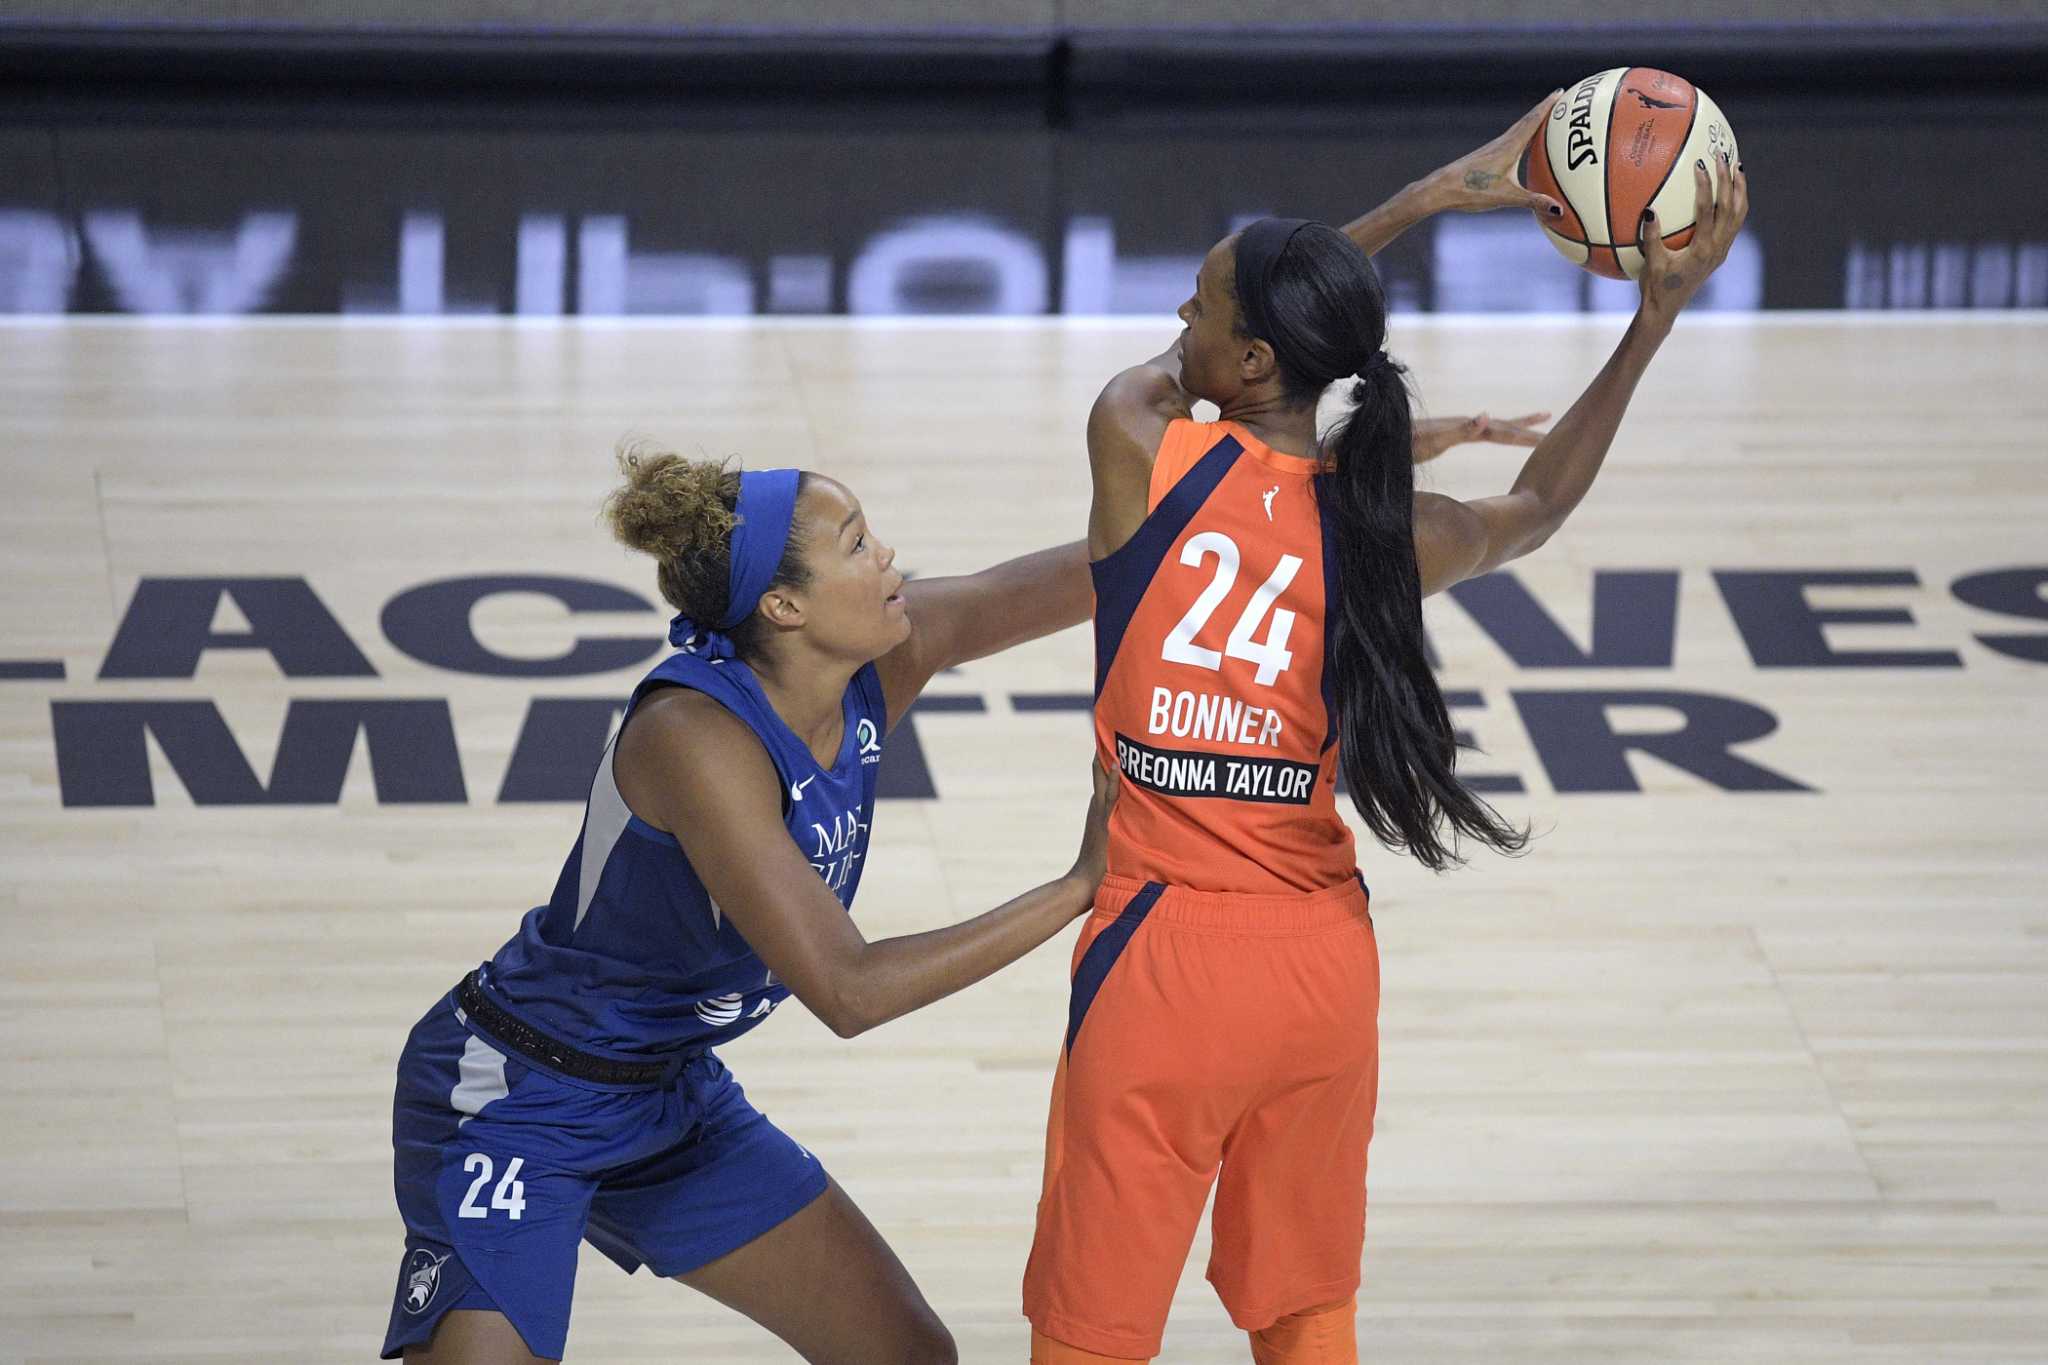 Former UConn star Napheesa Collier third-time WNBA All-Star